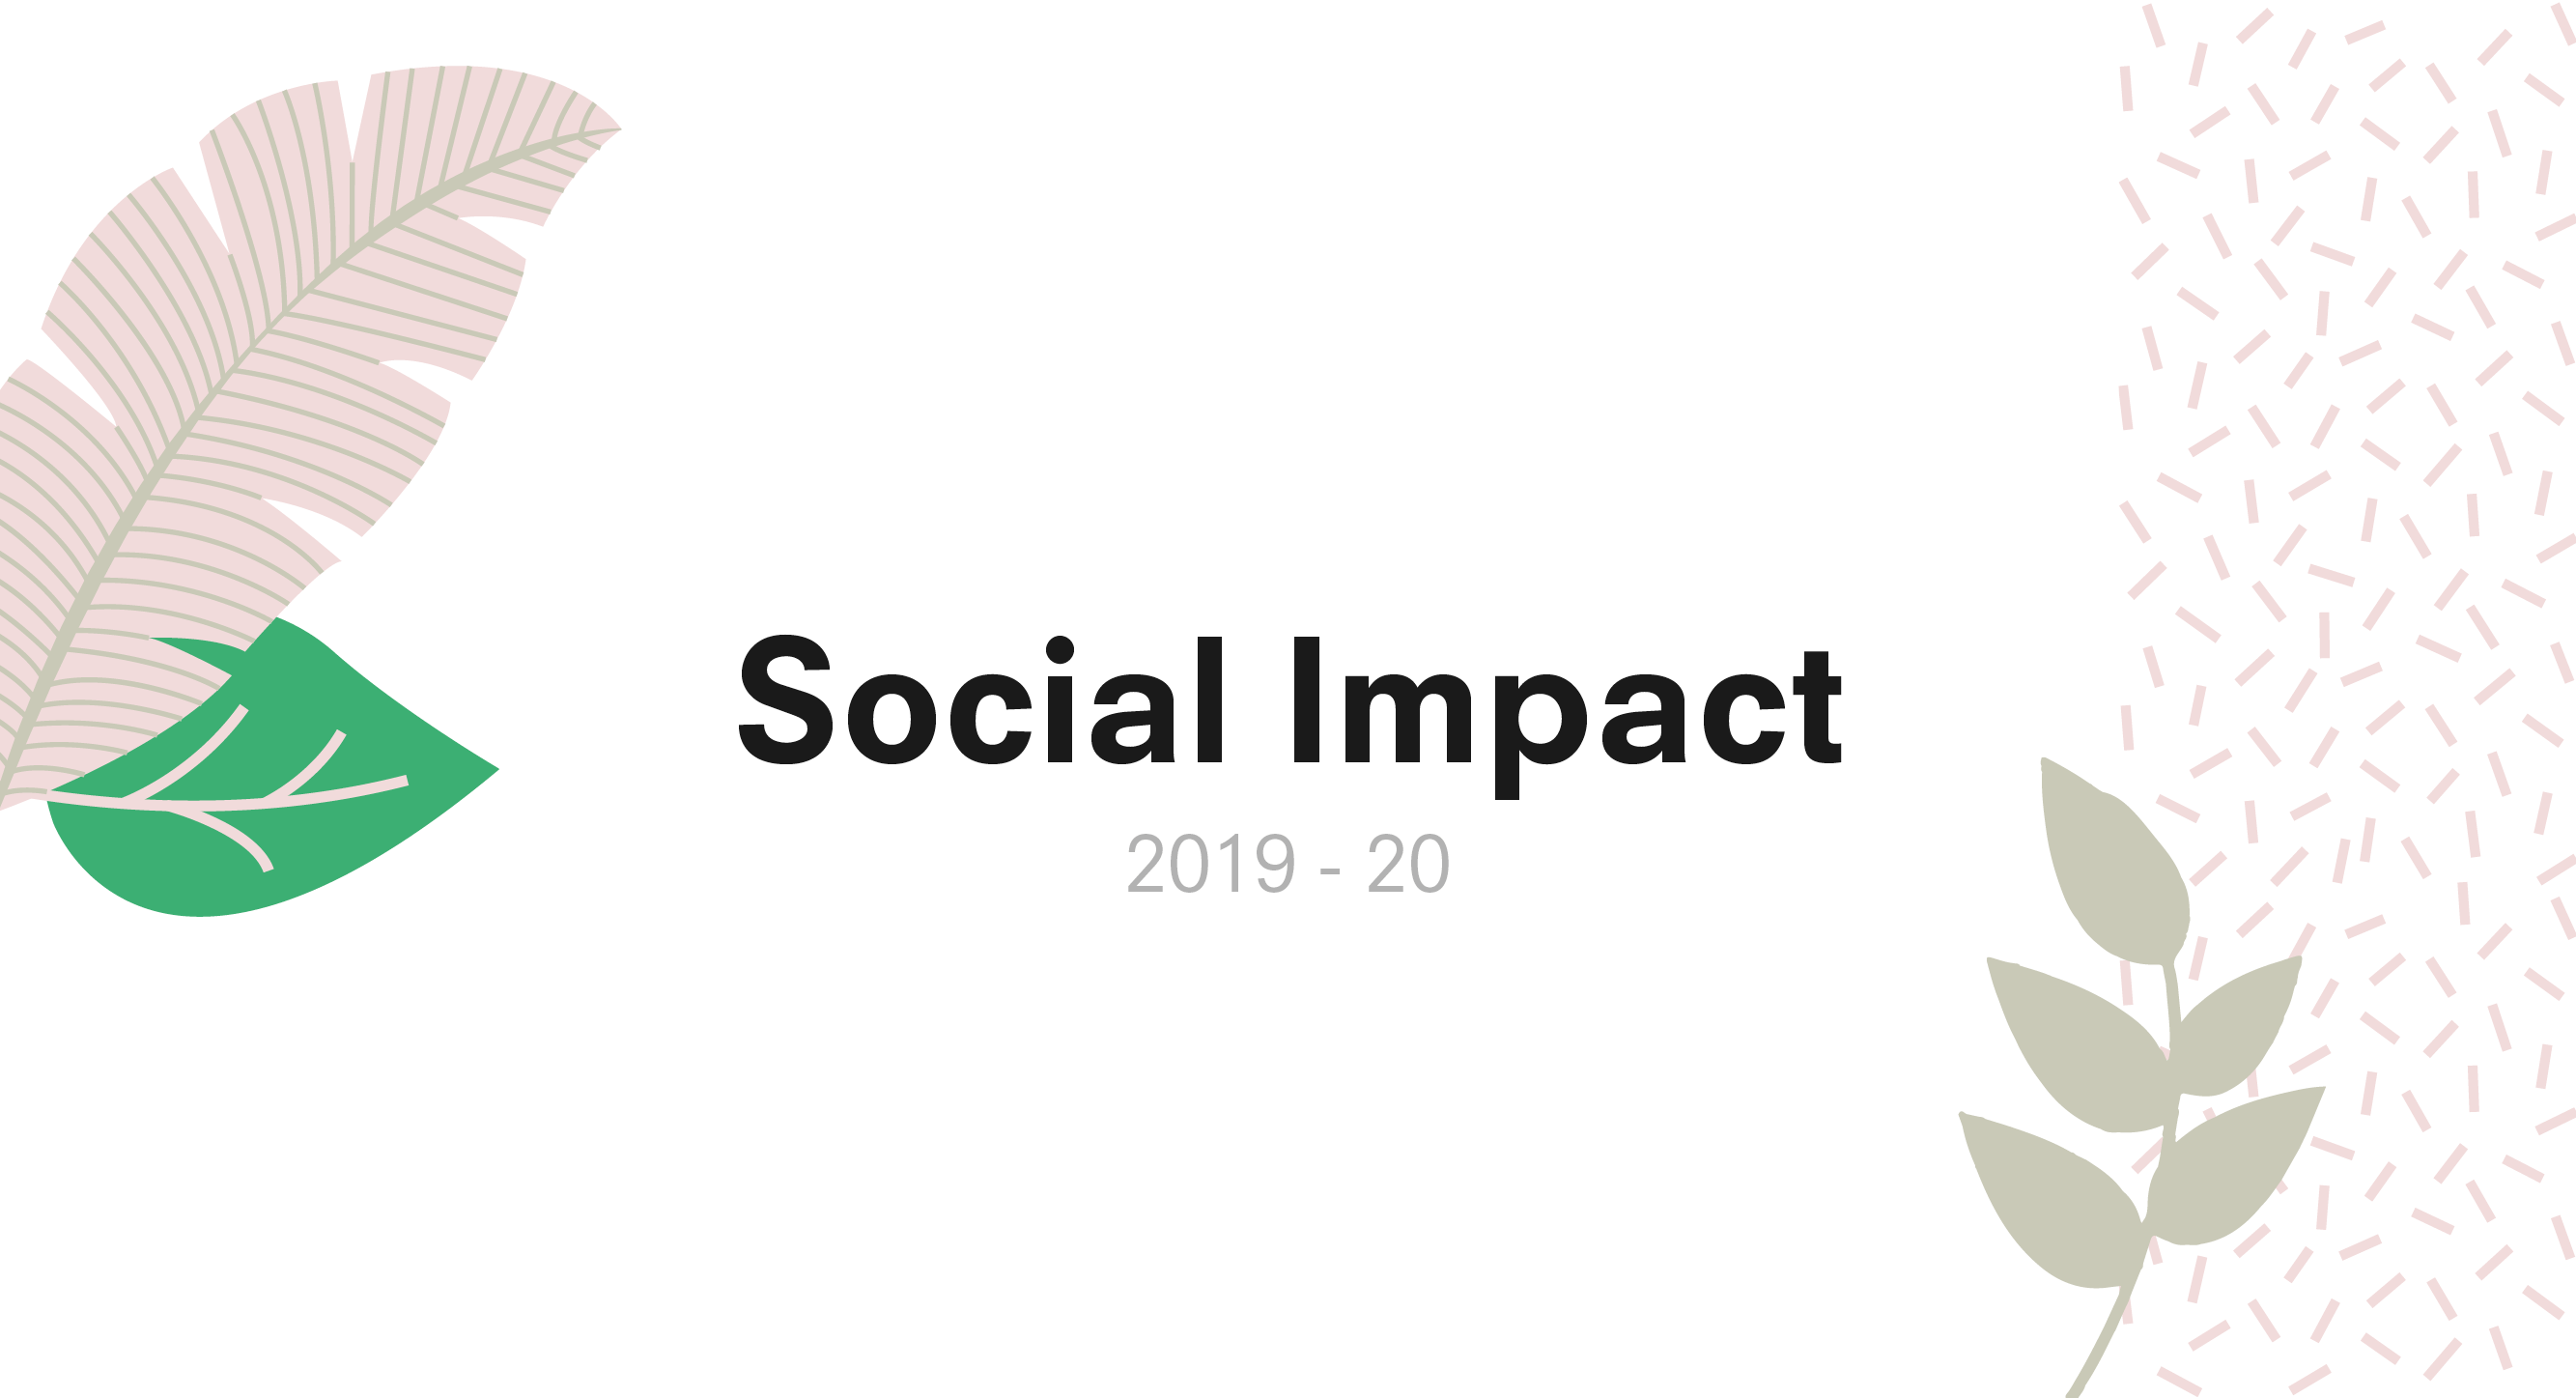 Blick's Social Impact